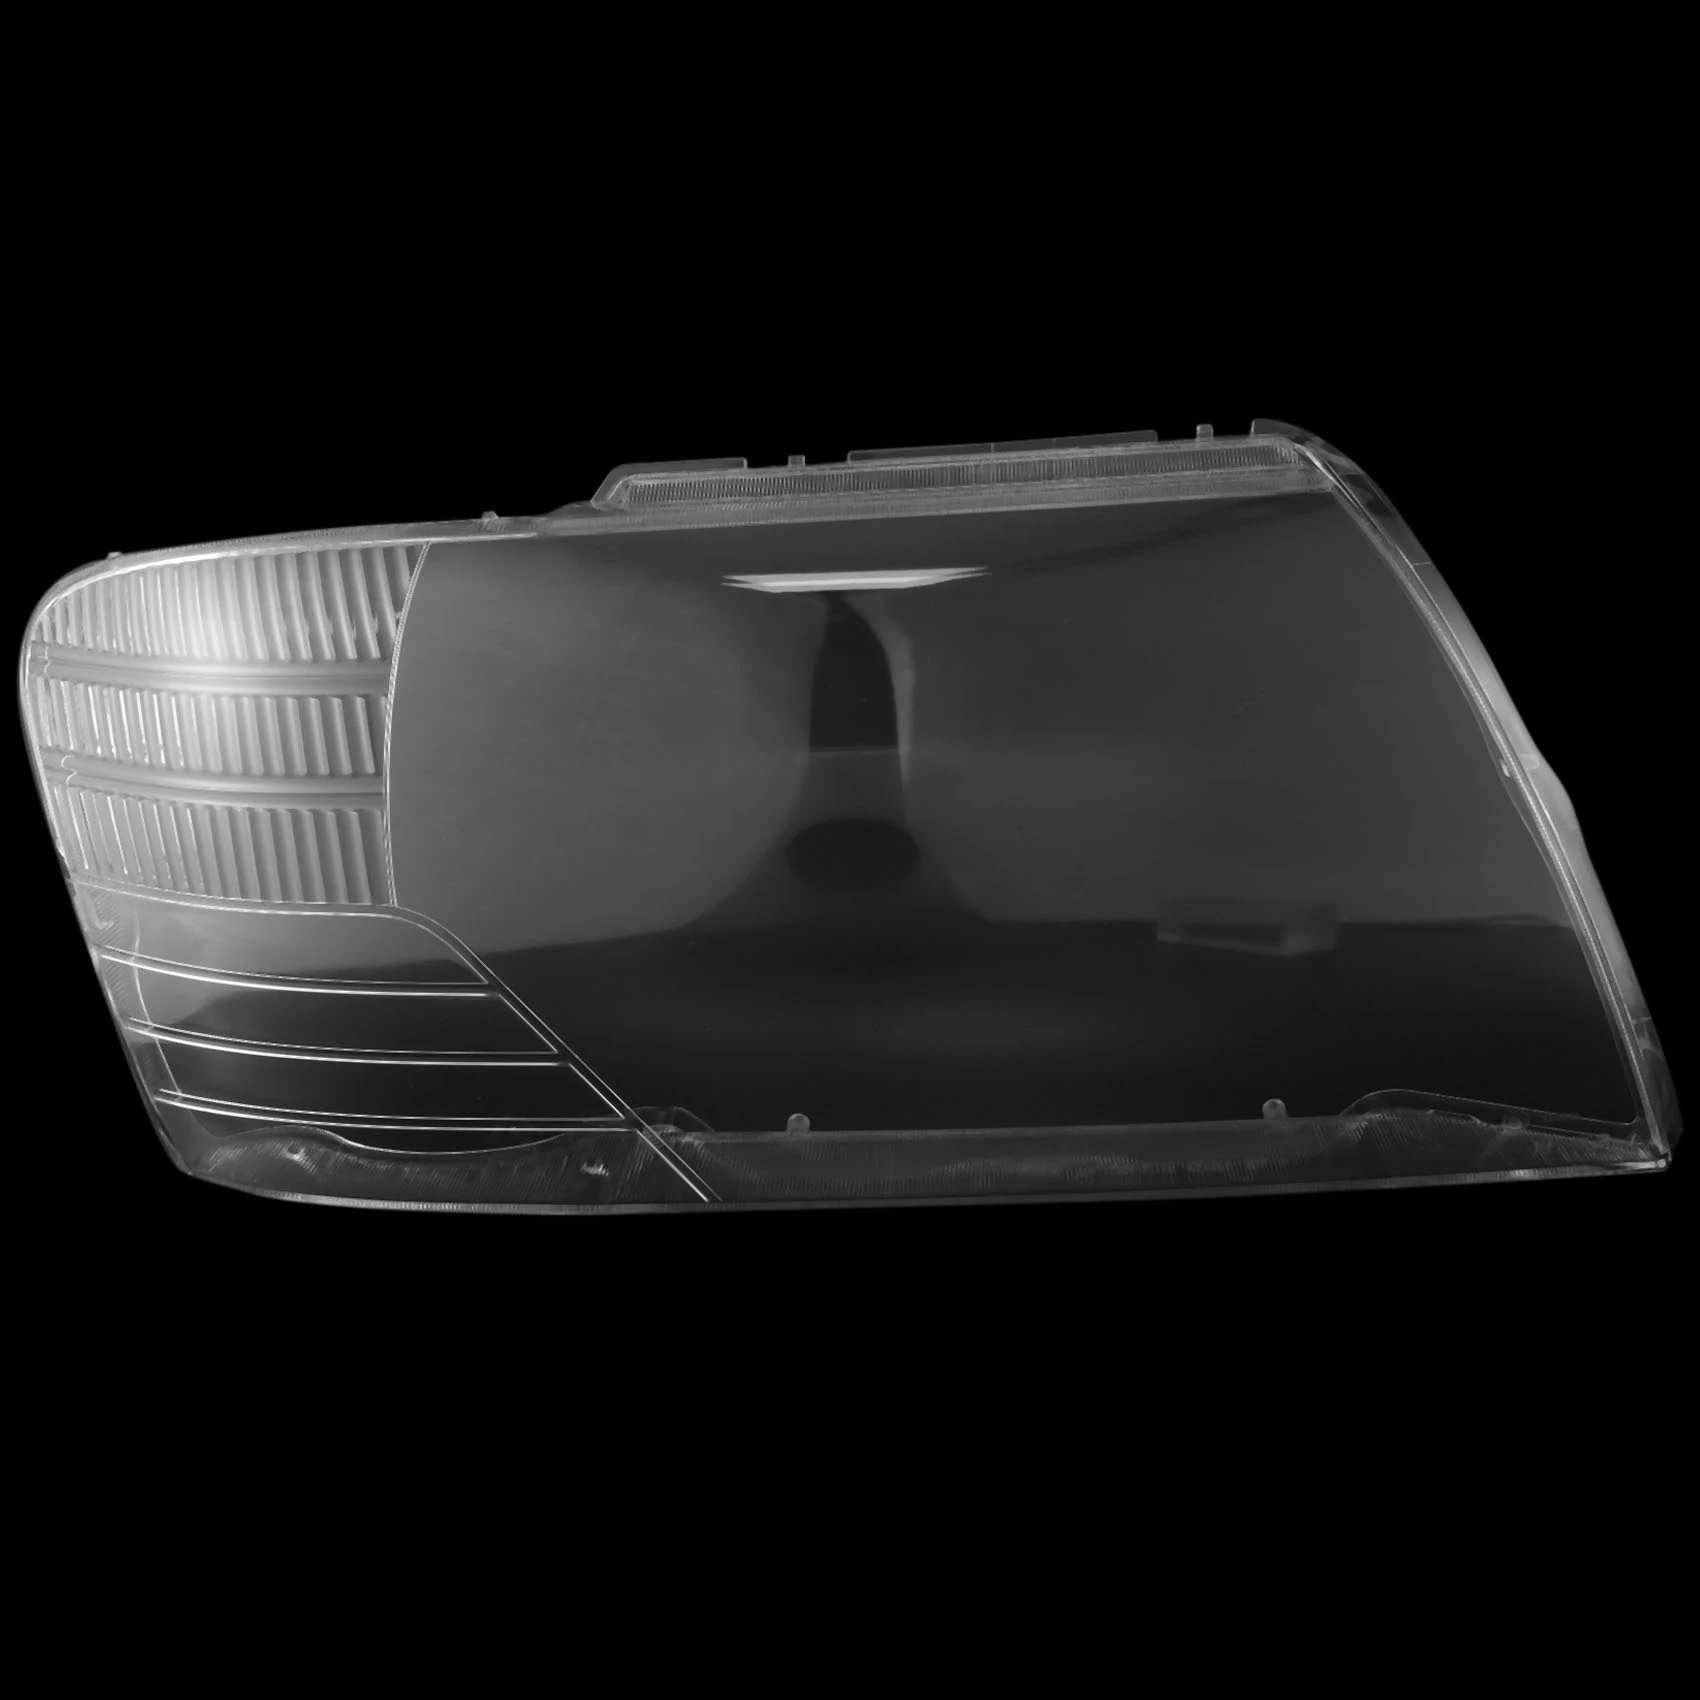 

for Mitsubishi Pajero V73 V75 2003-2011 Right Car Headlight Cover head light lamp Transparent Lampshade Shell Lens